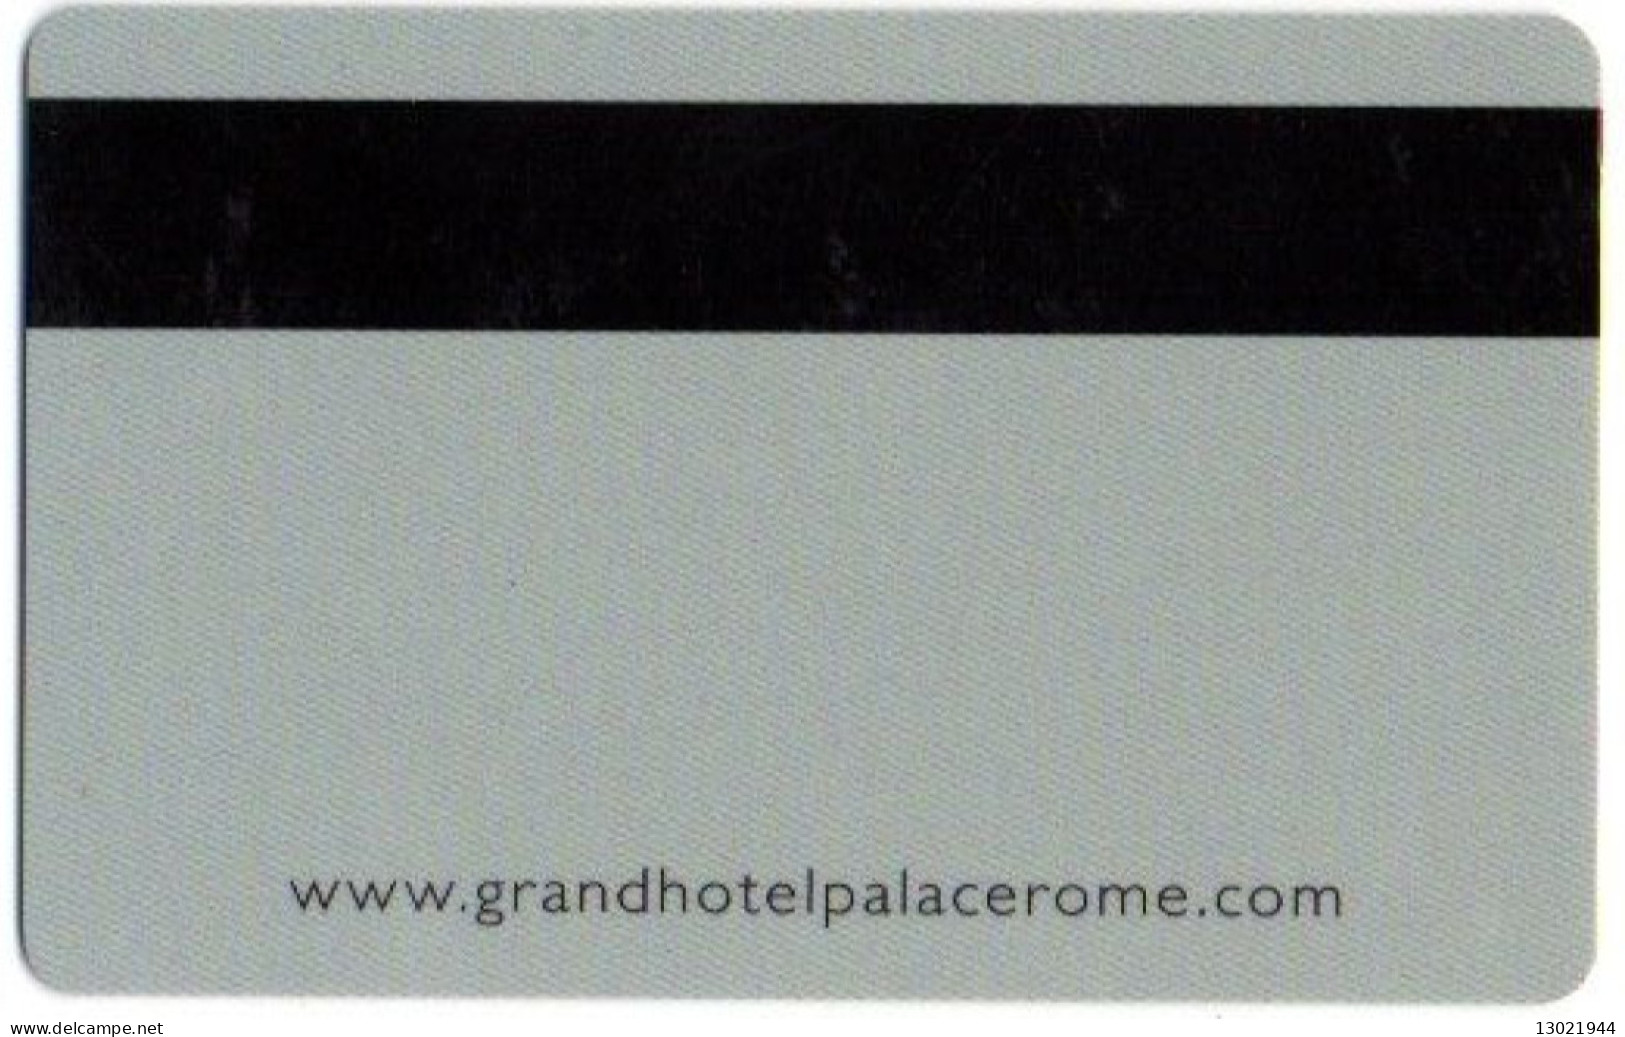 ITALIA  KEY HOTEL   Grand Hotel Palace Rome - Hotel Keycards